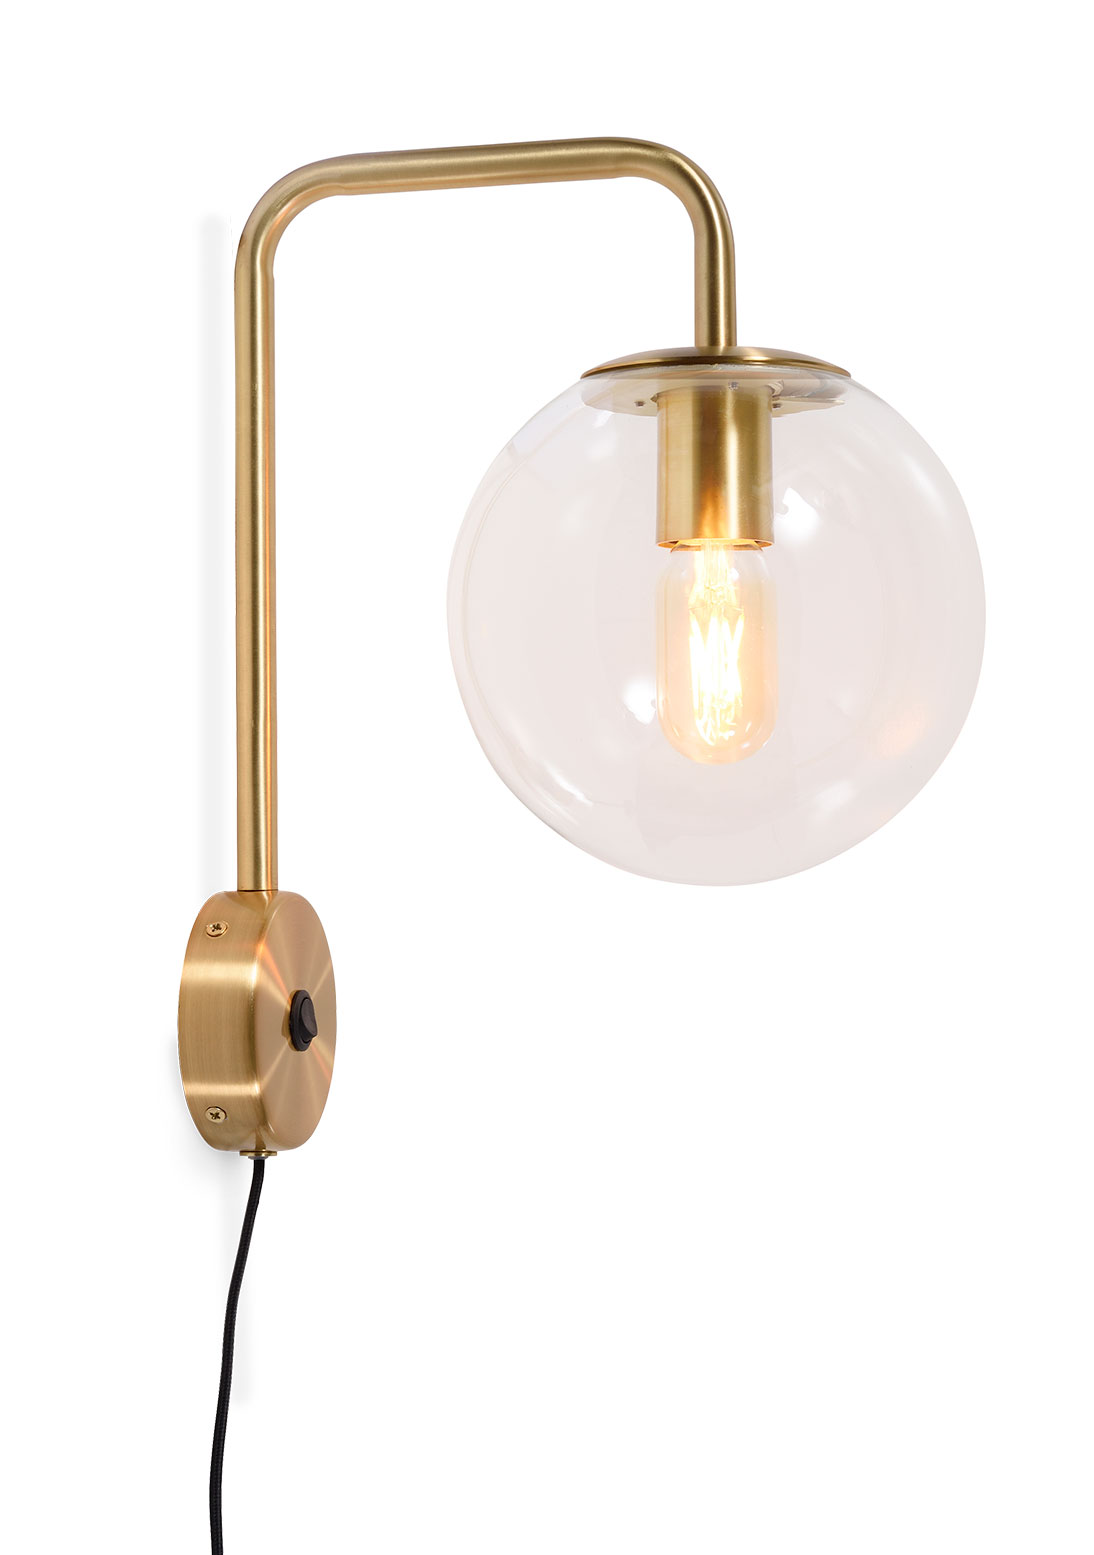 Moderne Glaskugel-Wandlampe mit Kabel, golden oder schwarz, Bild 2